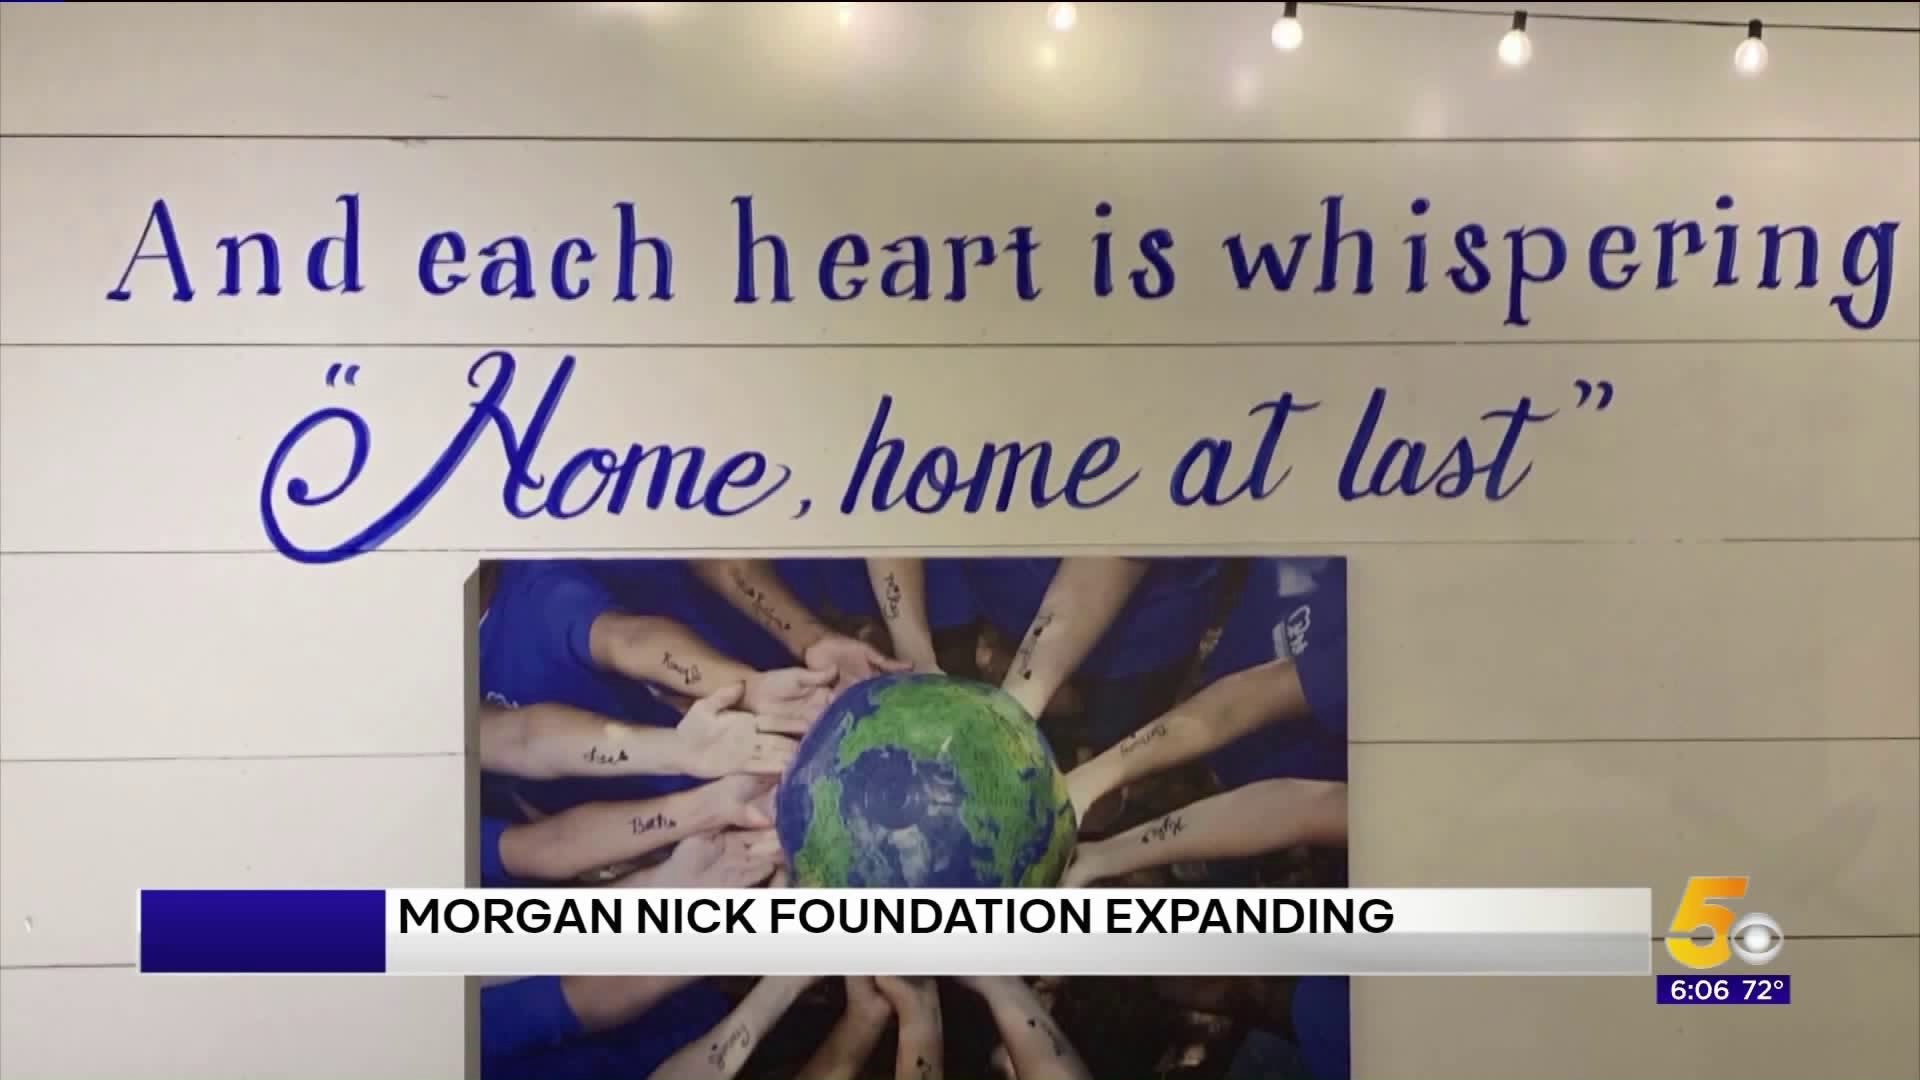 Morgan Nick Foundation To Expand, Helping More Arkansas Families